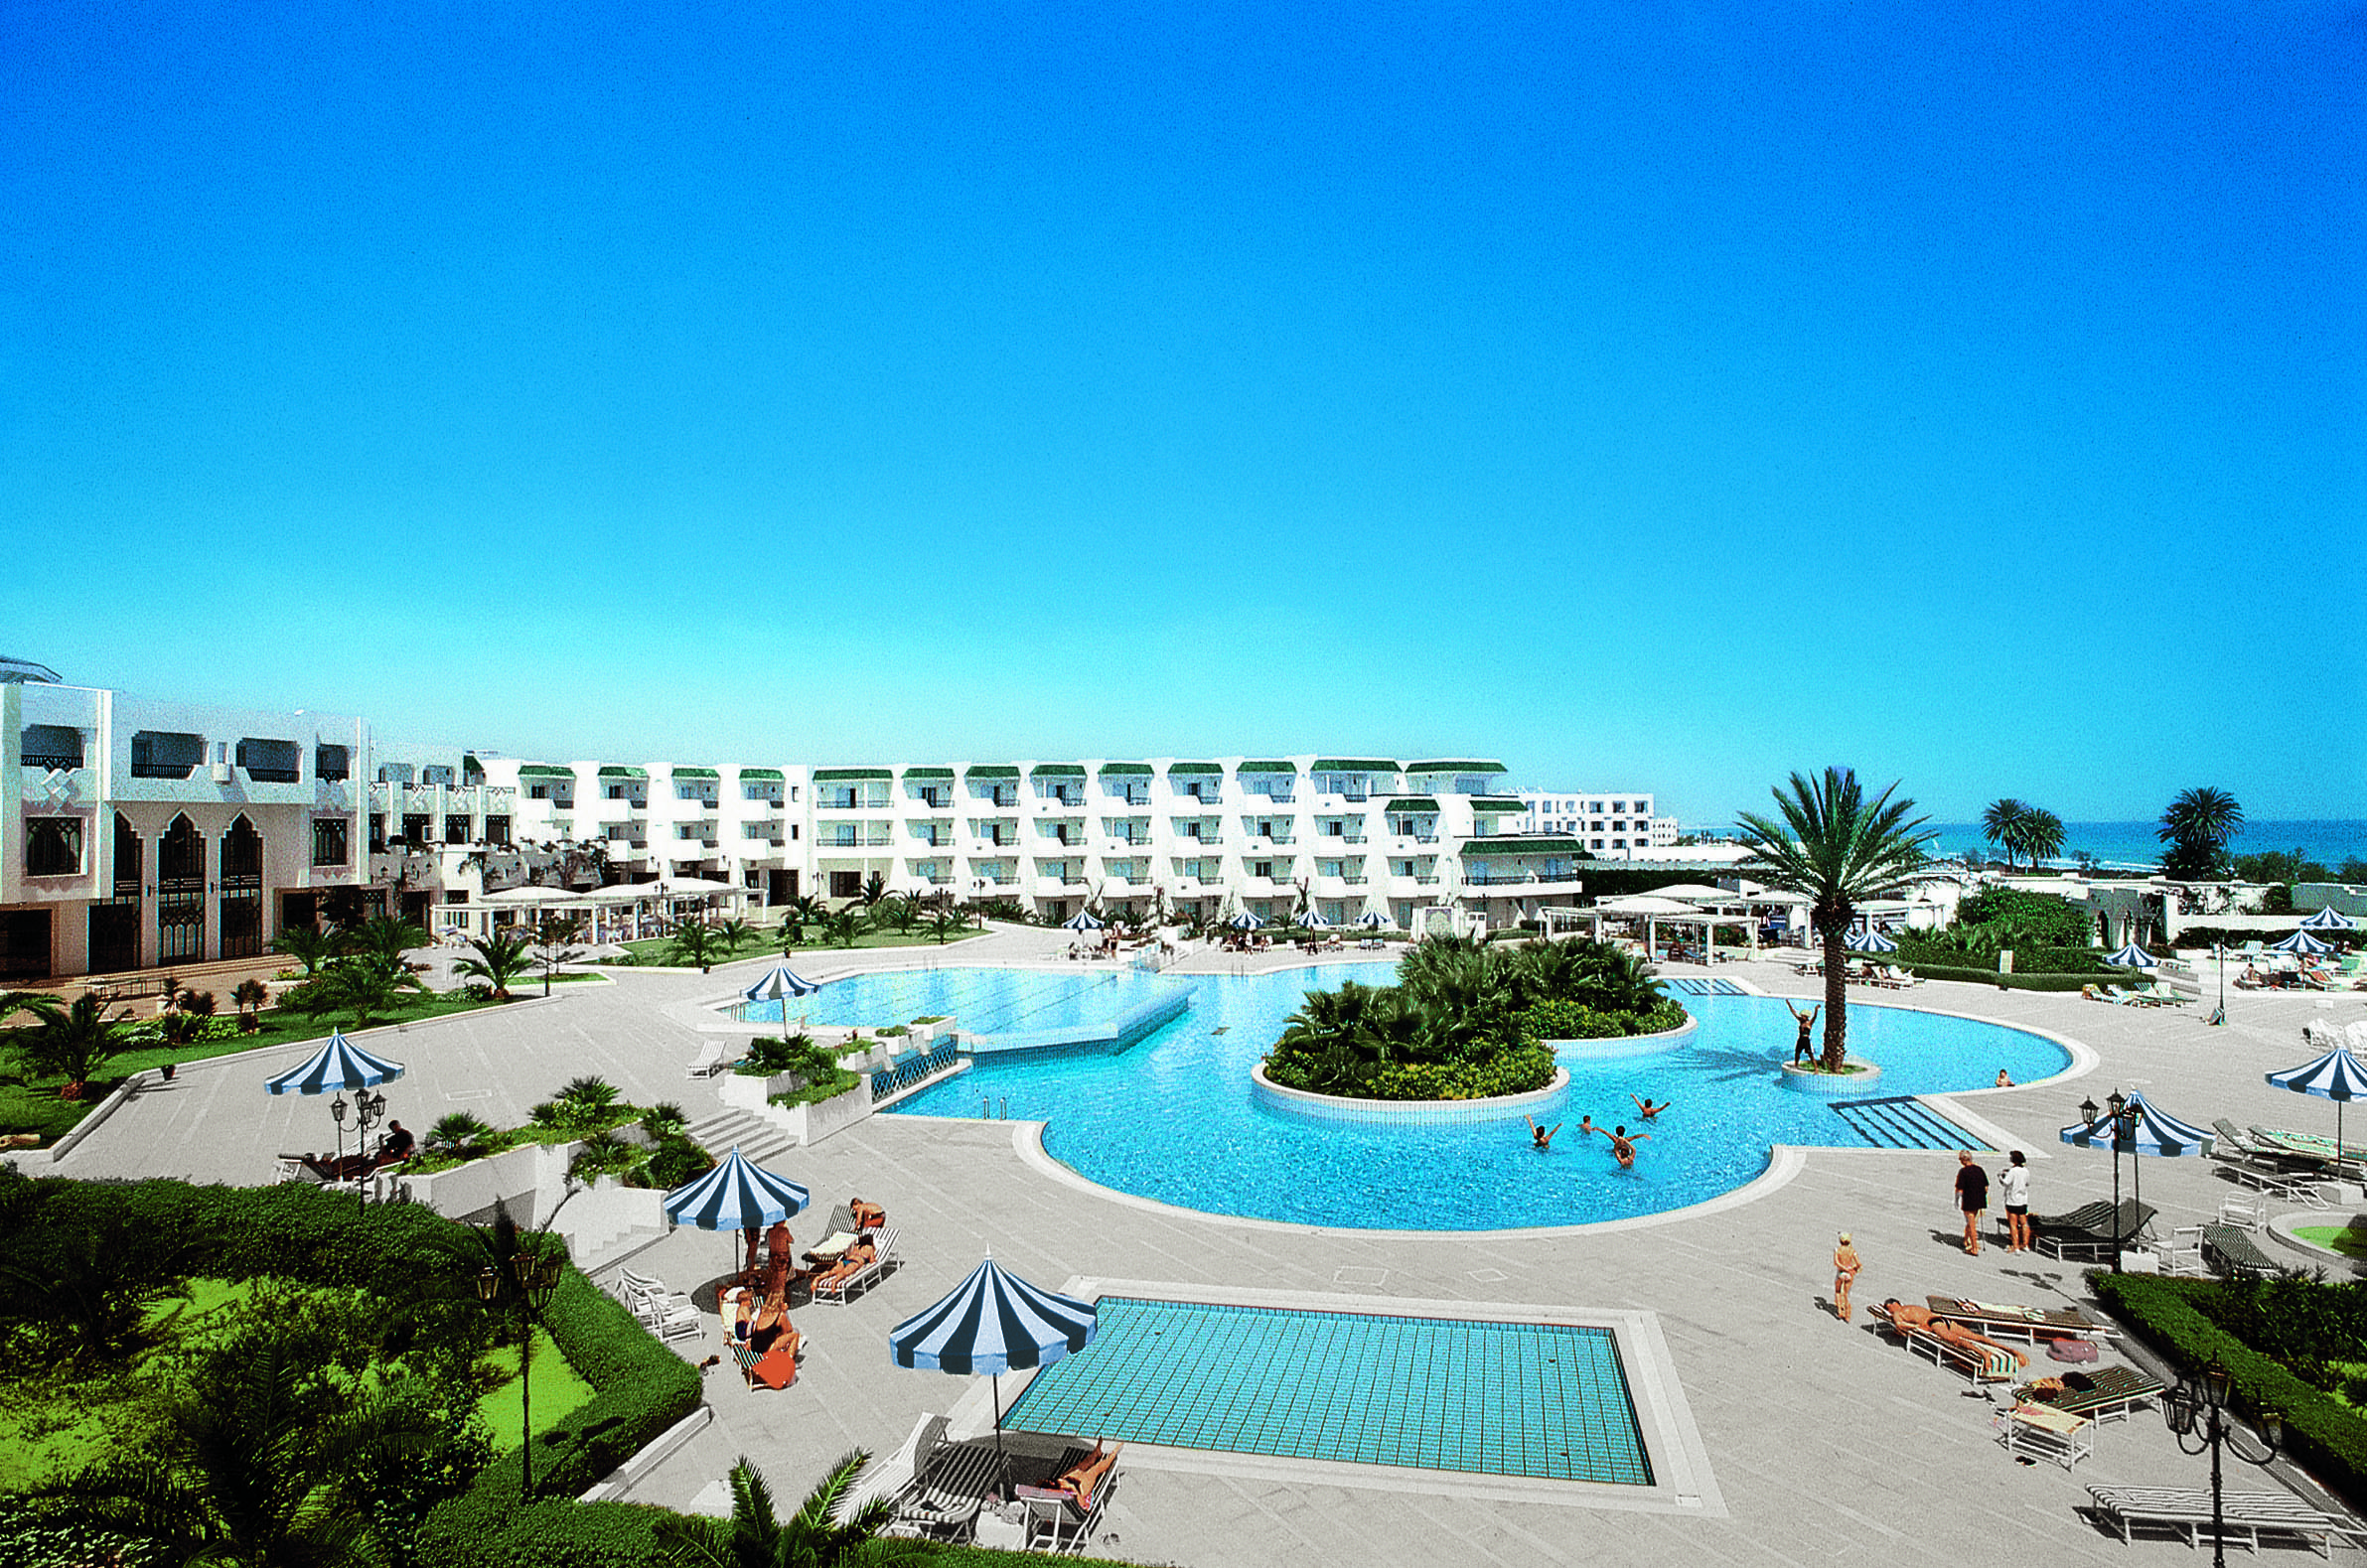 ONE Resort El Mansour image